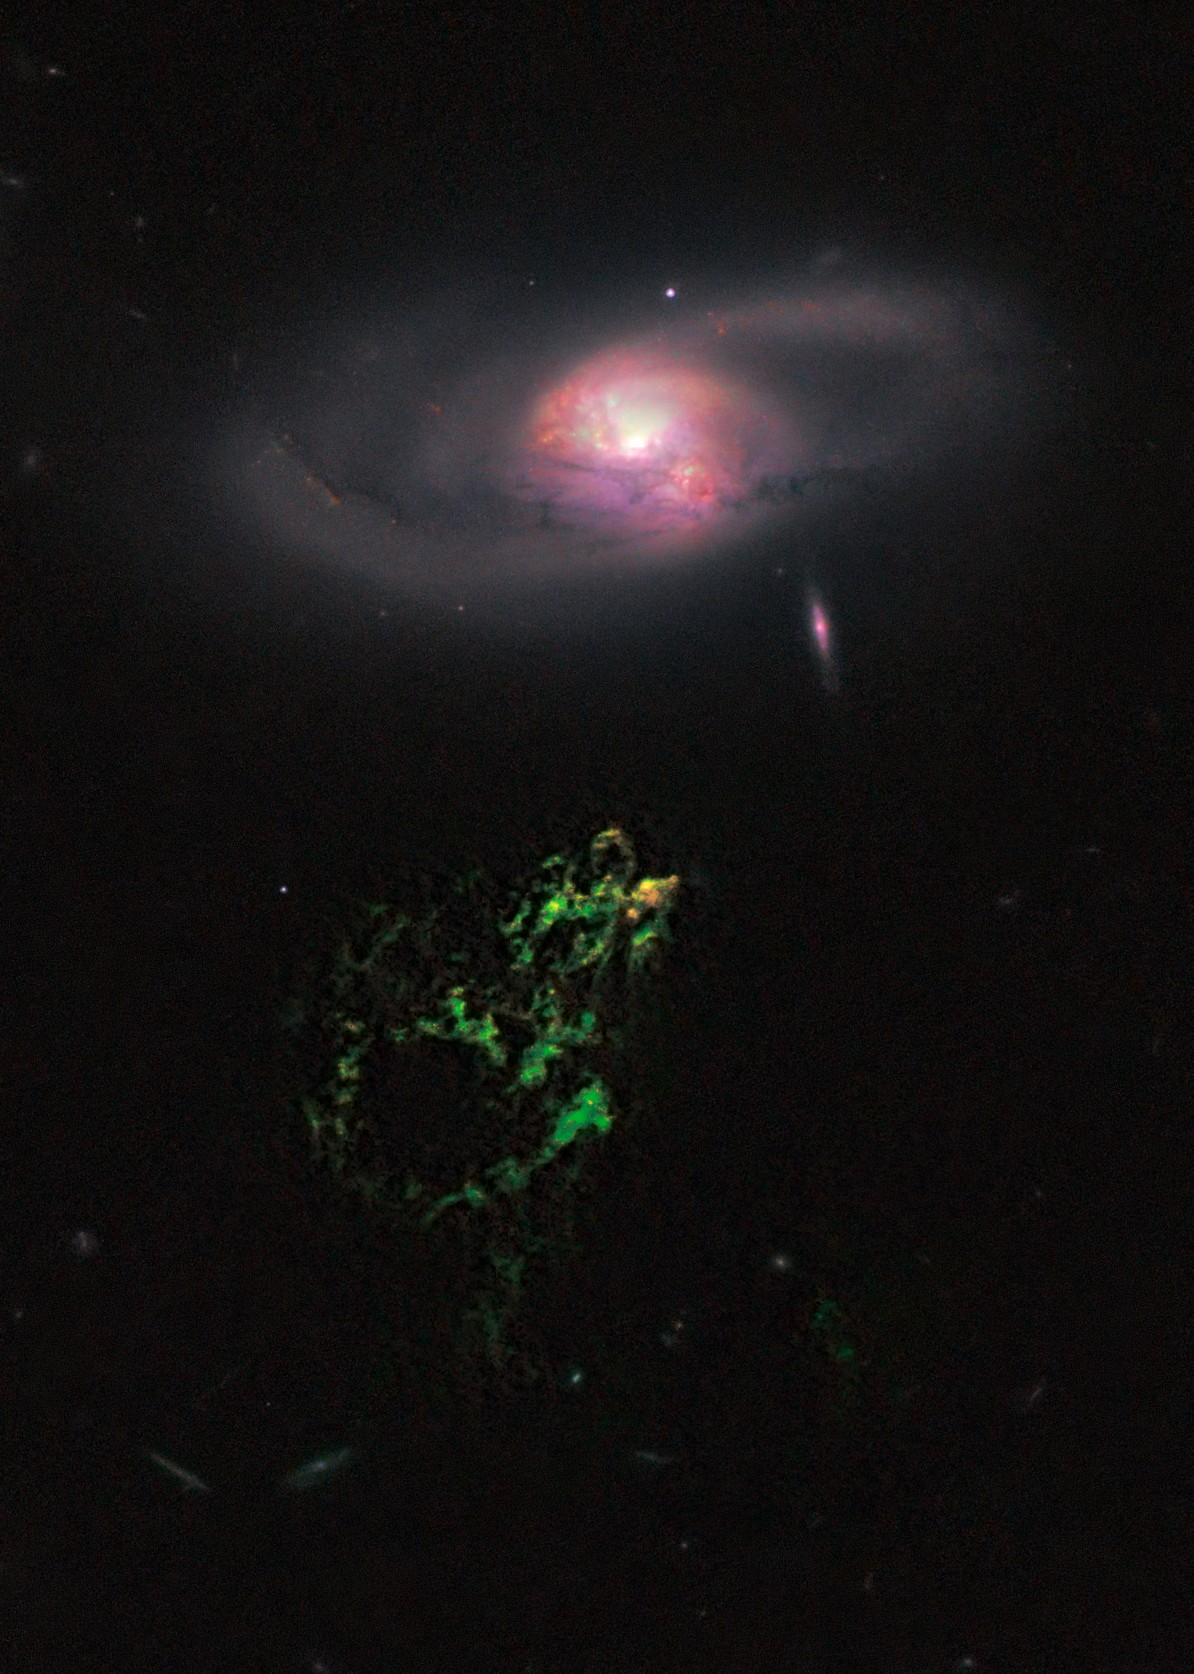 Voorwerp de Hanny e a galáxia IC 2497, captadas pelo Telescópio Hubble (Foto: NASA, ESA, W. Keel e equipe do Galaxy Zoo/Wikimedia Commons)